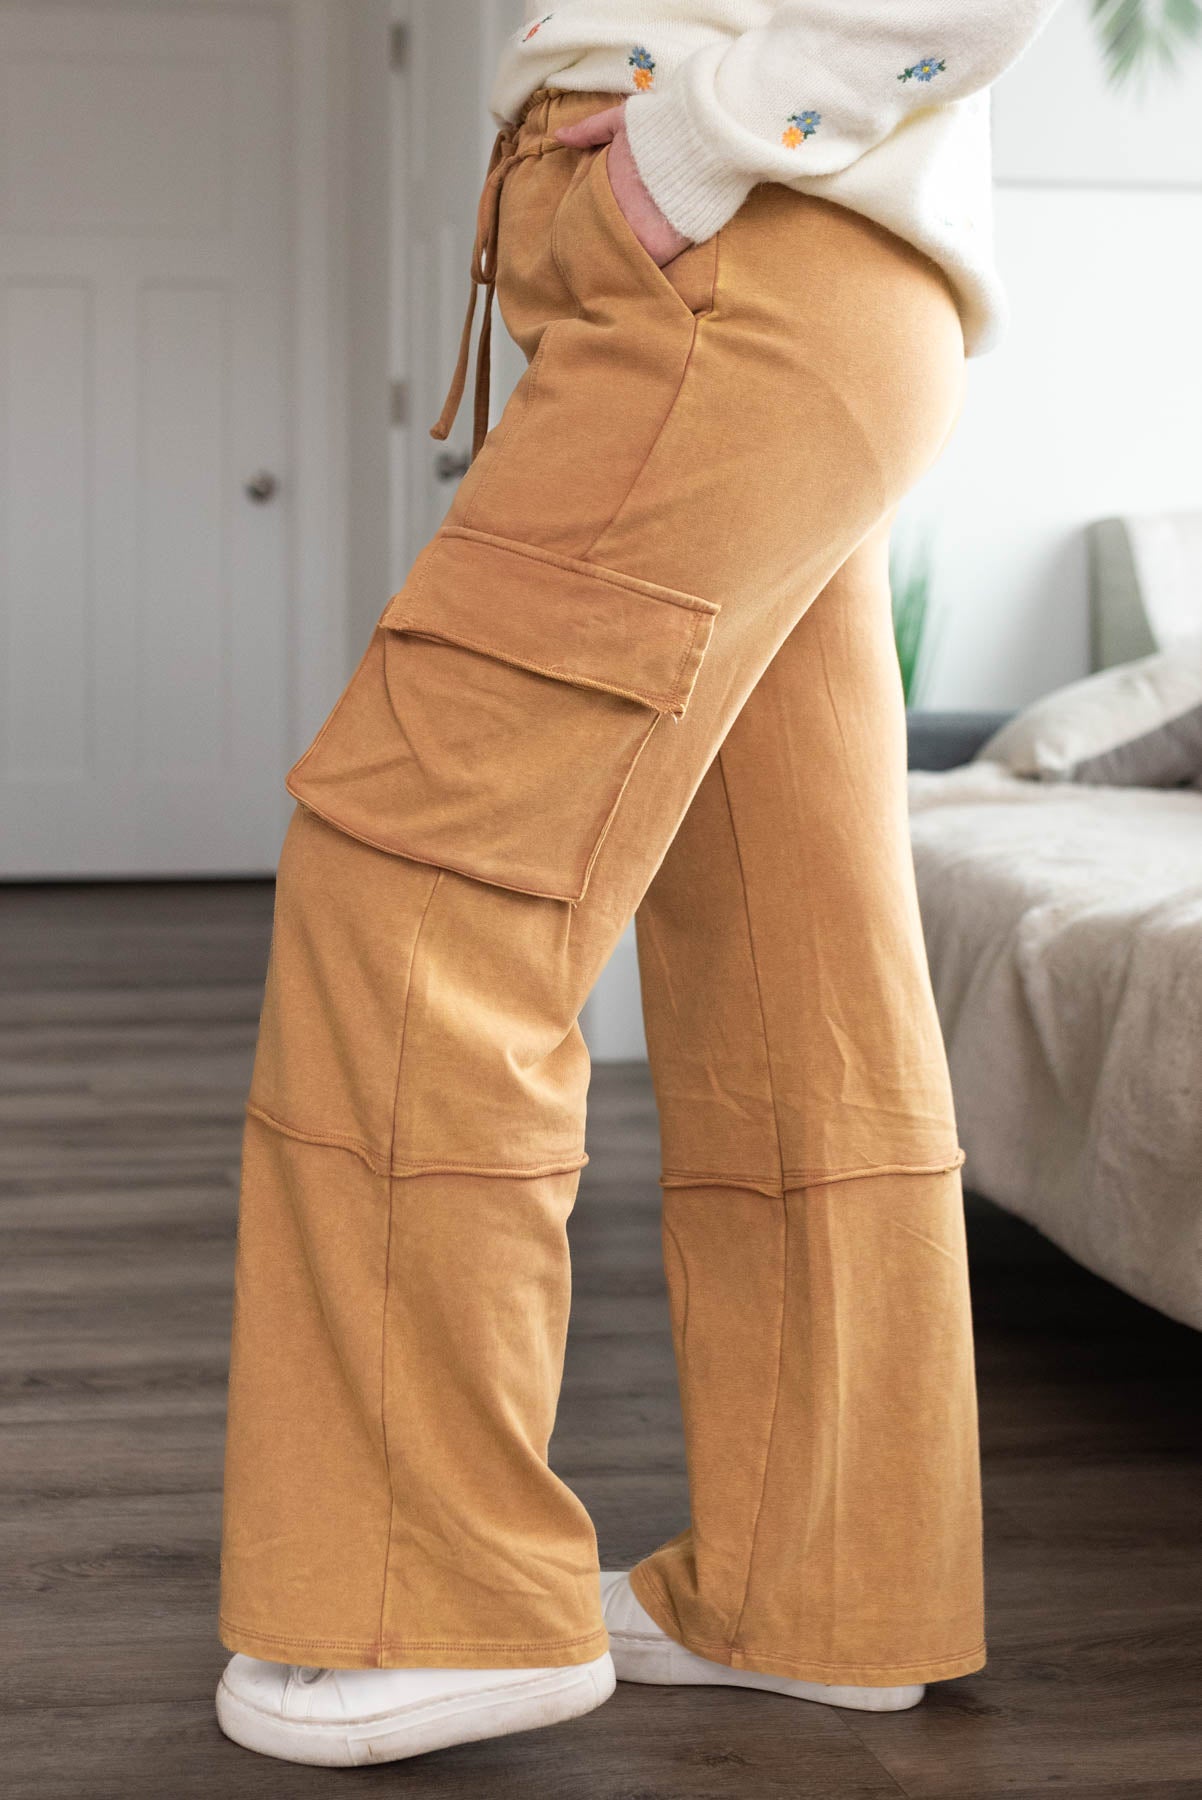 Side view of mocha pants